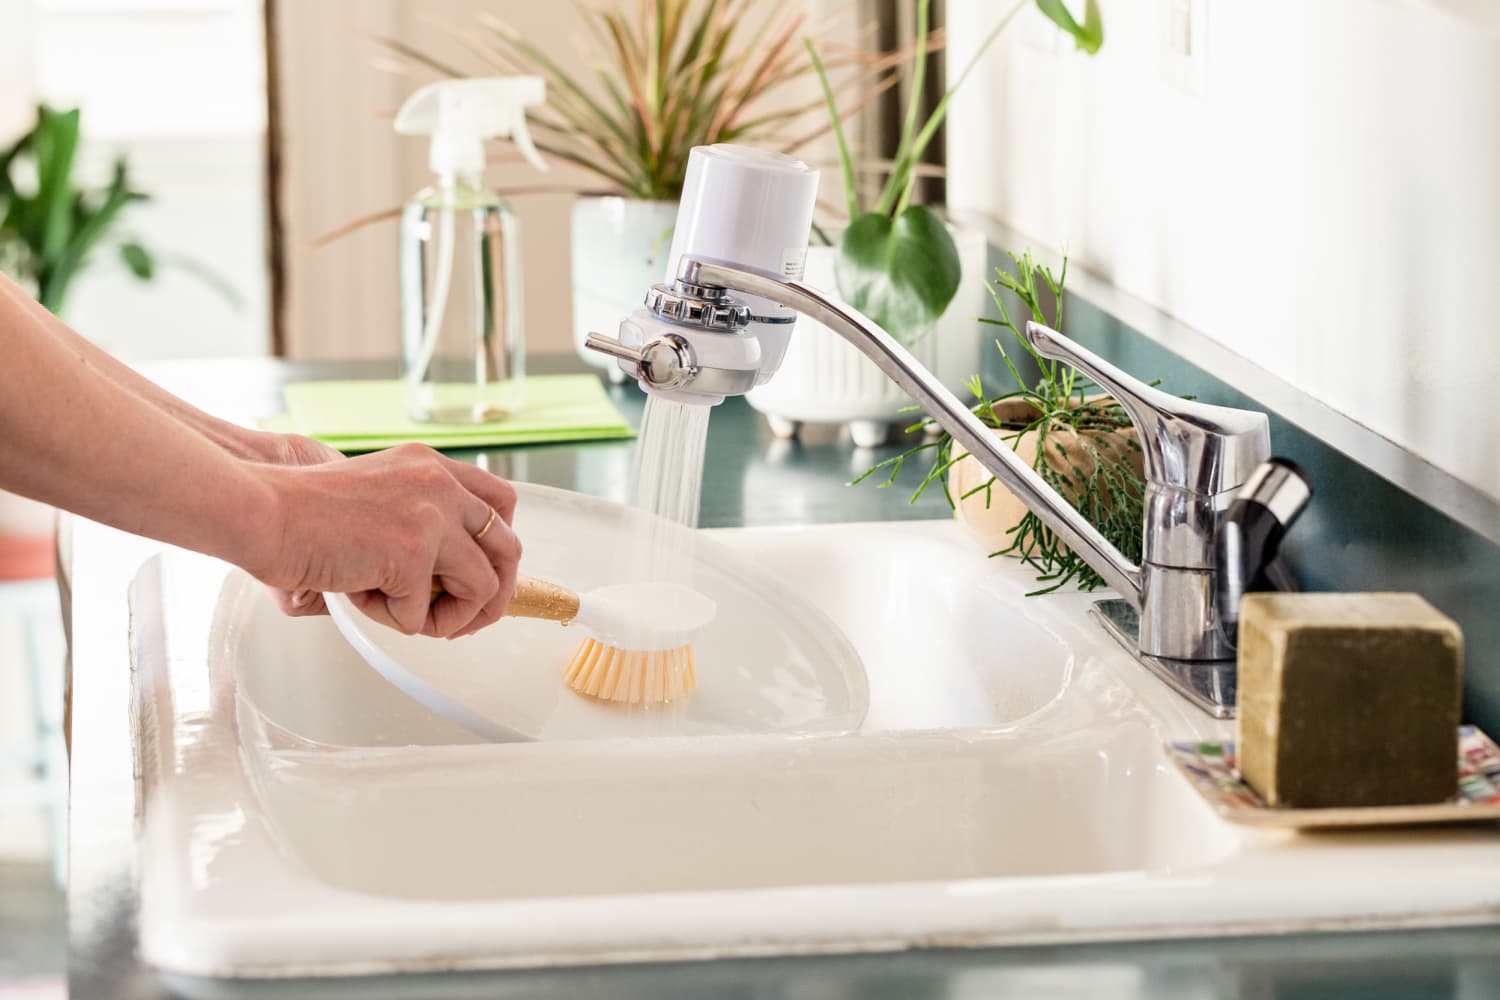 2-in-1 Soap Dispensing Cleaning Brush, Automatic Liquid Adding